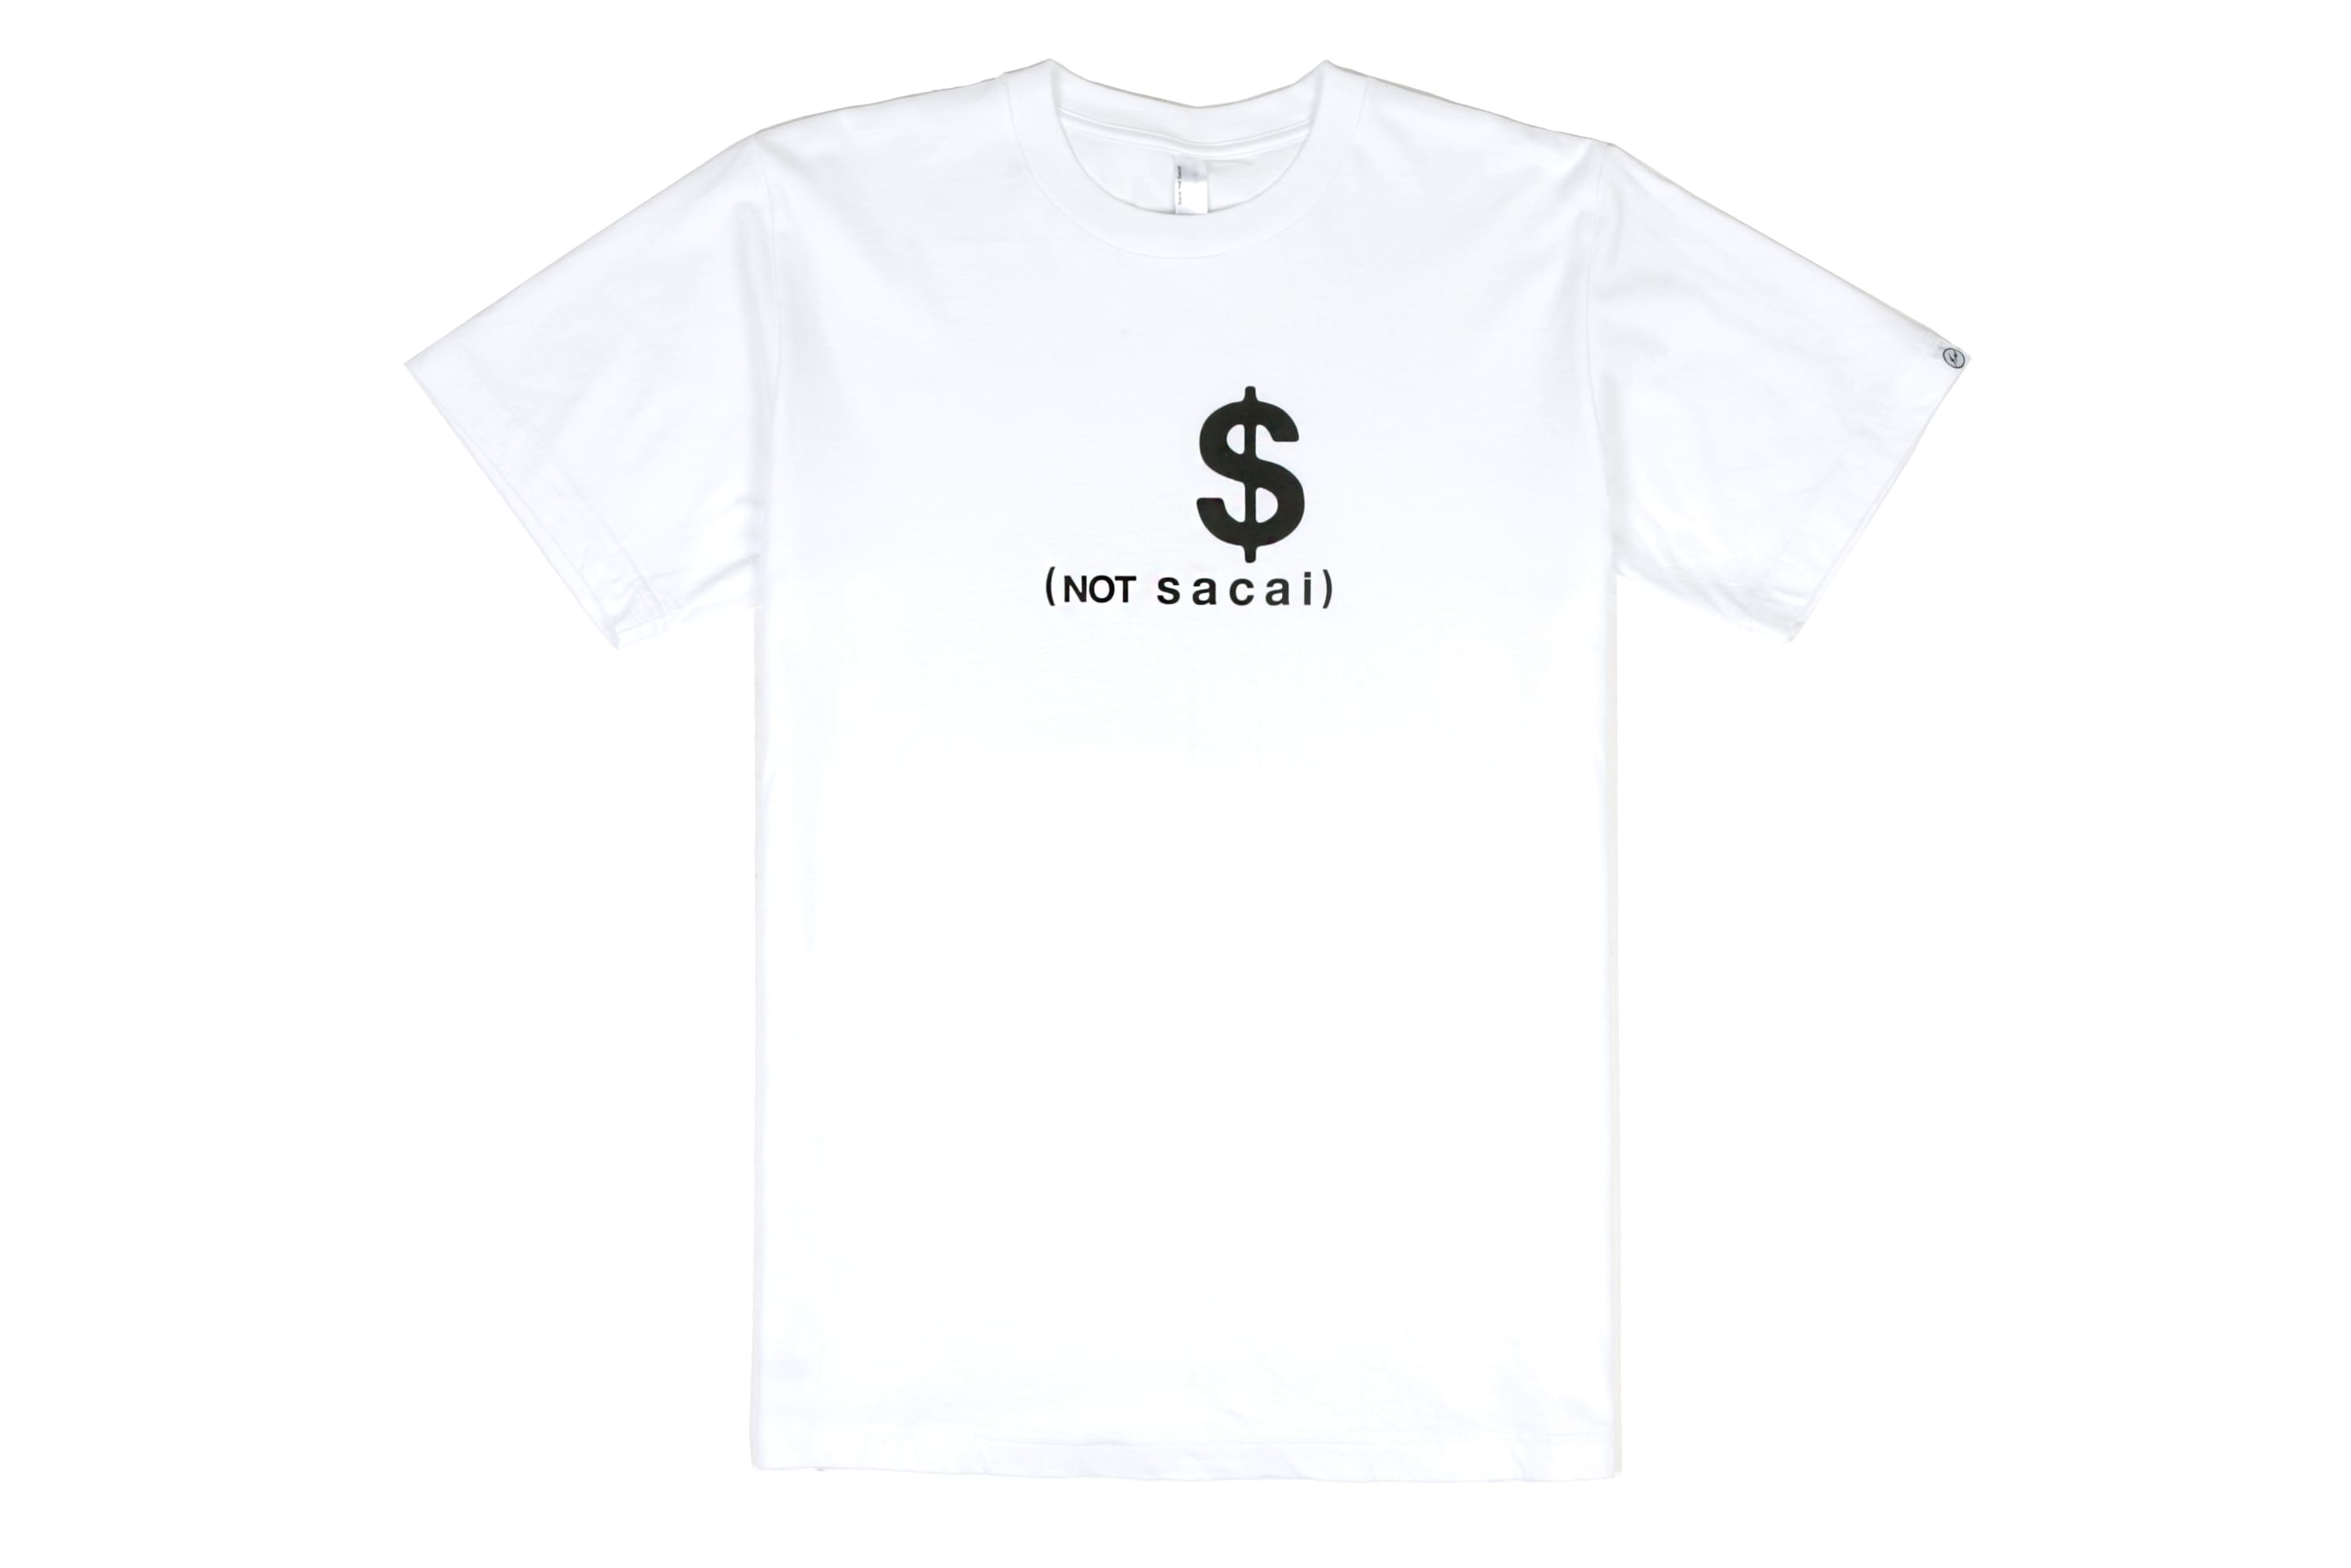 sacai x fragment T-Shirt Collection | Hypebeast